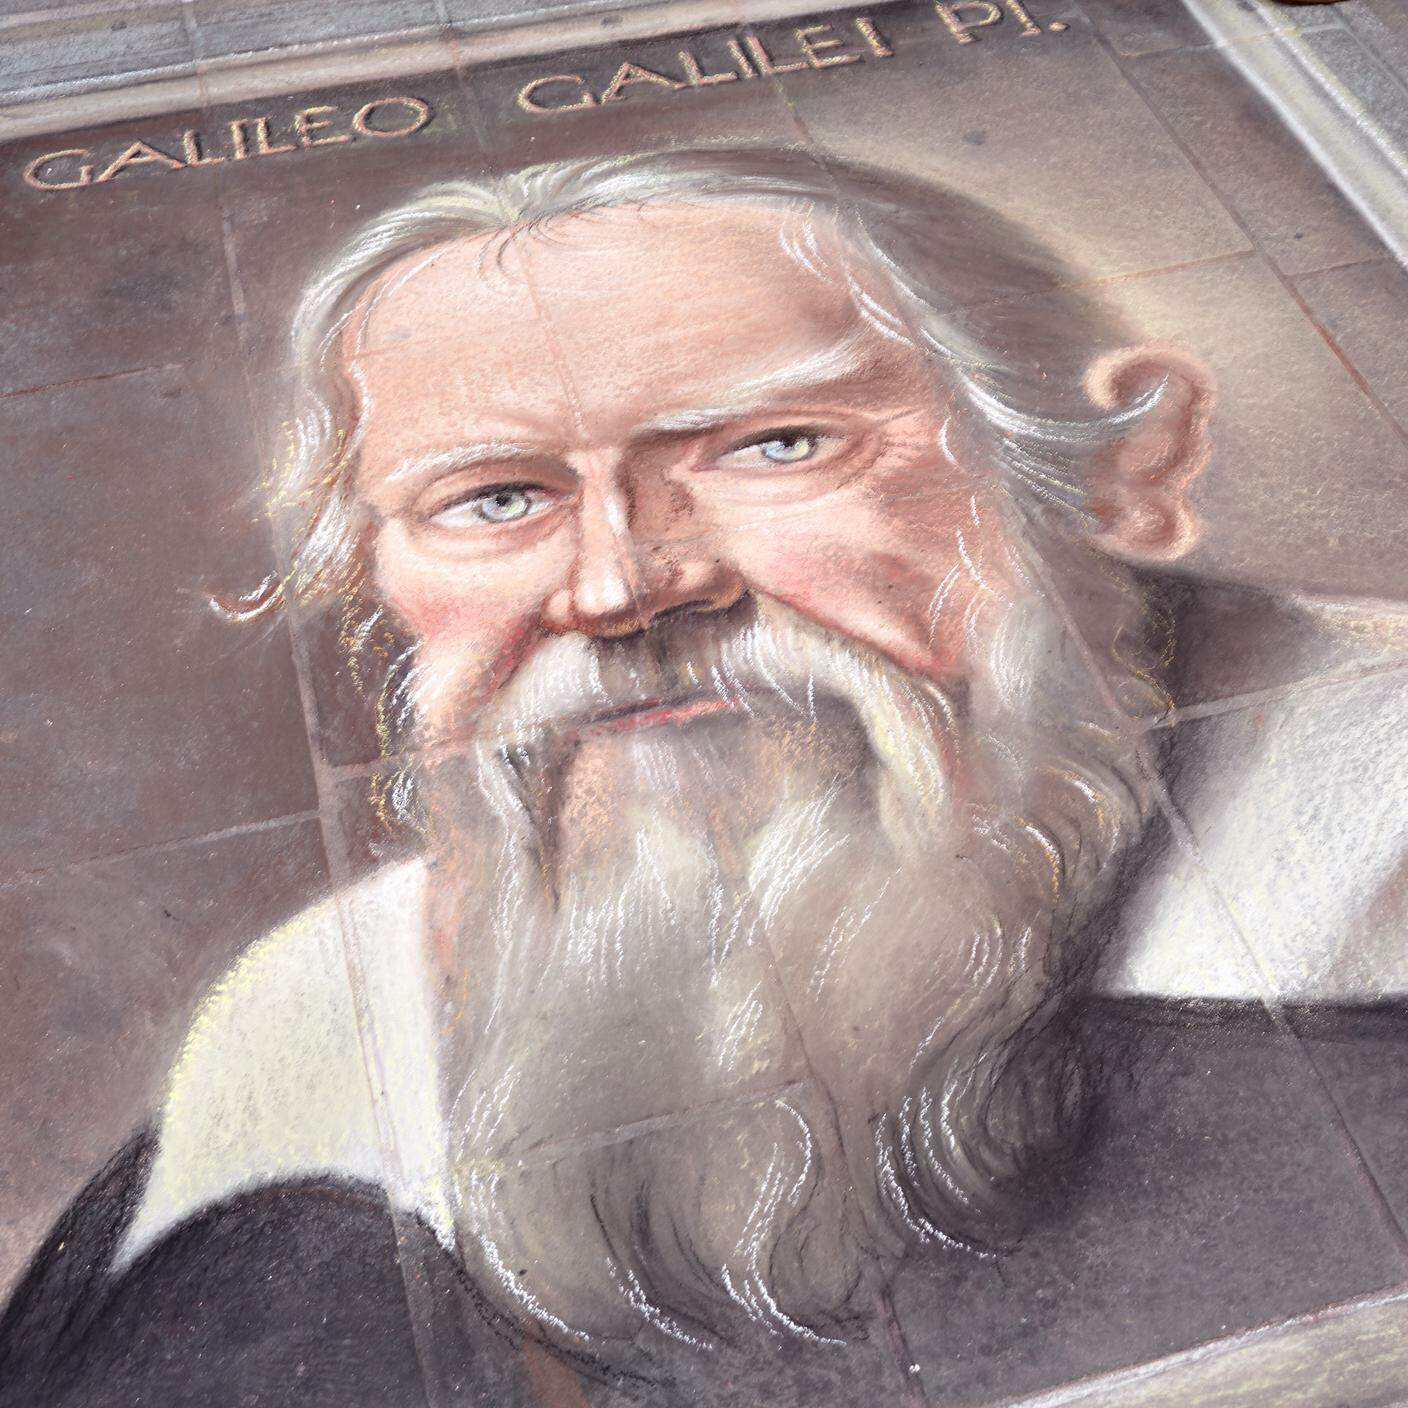 Galileo Galilei - iStock